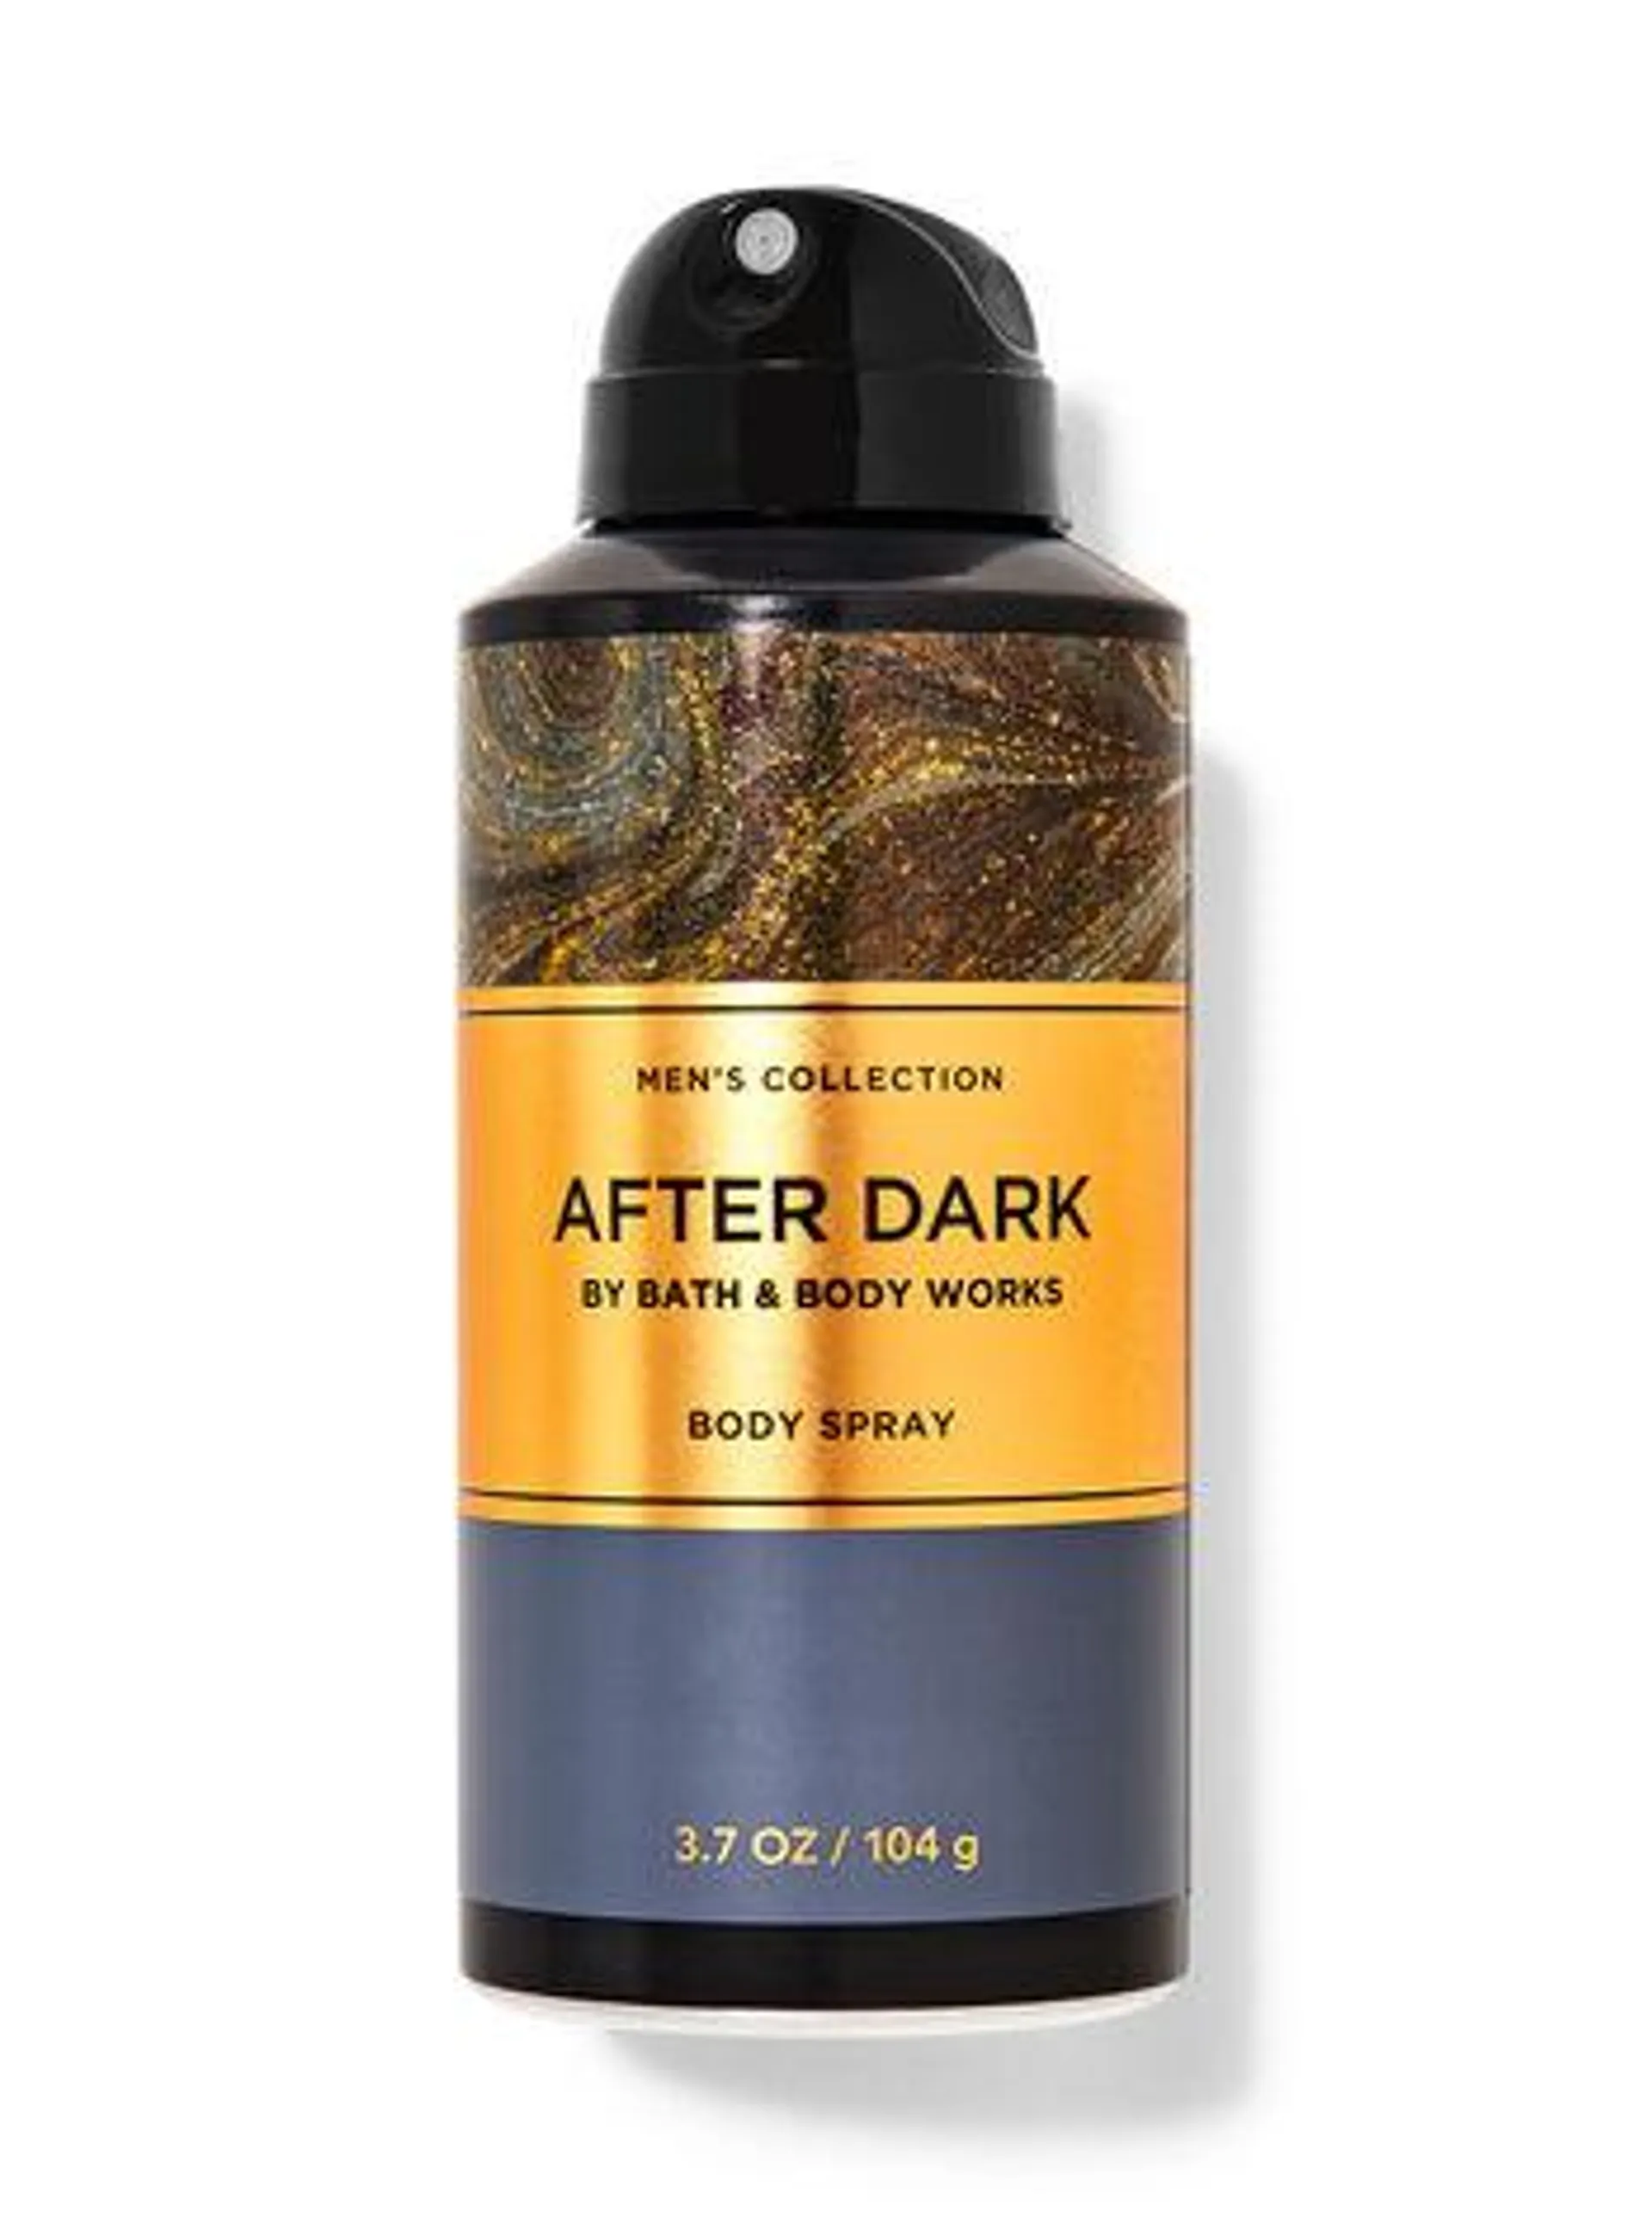 After Dark Body Spray